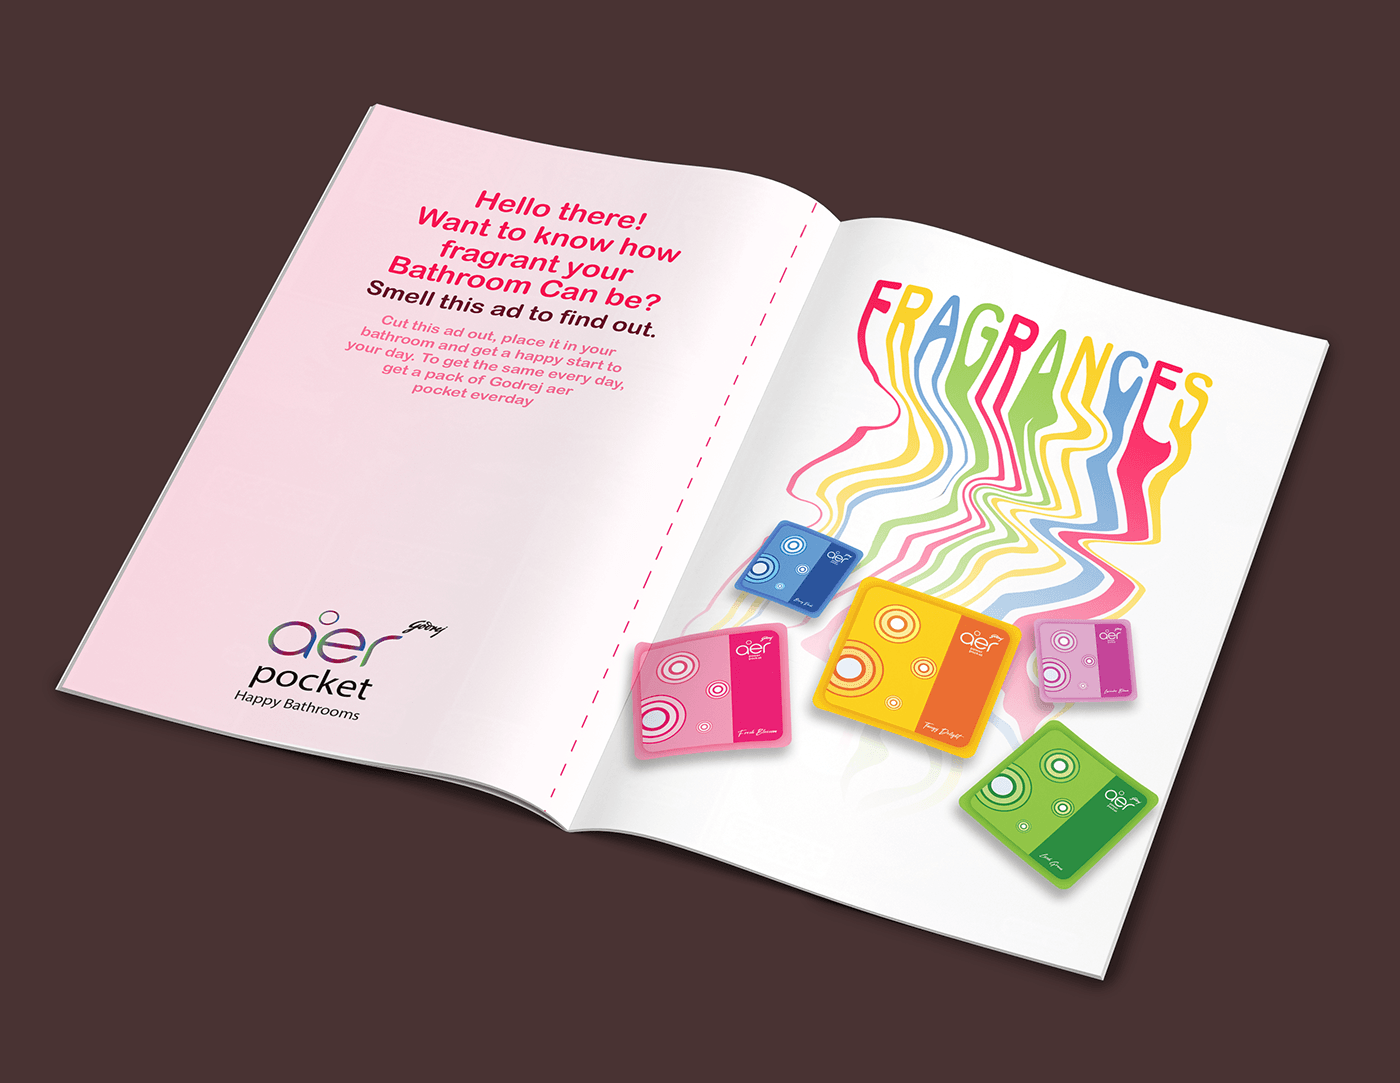 design Graphic Designer Advertising  marketing   package design  packing Magazine Ad print design  Packaging adobe illustrator